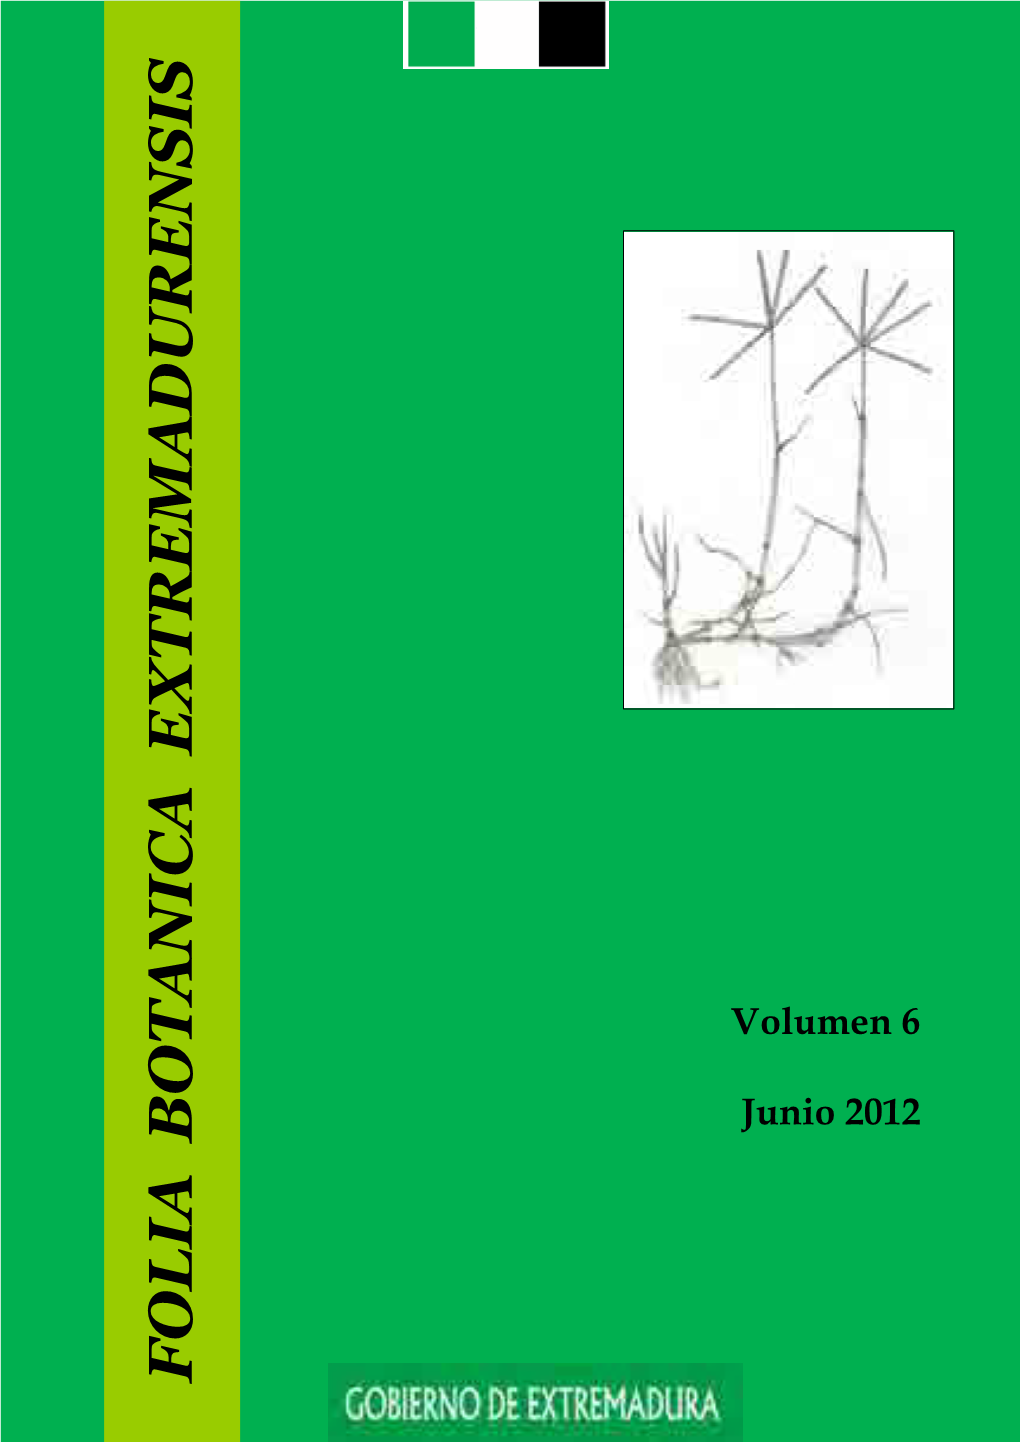 Folia Botanica Extremadurensis, Vol. 6